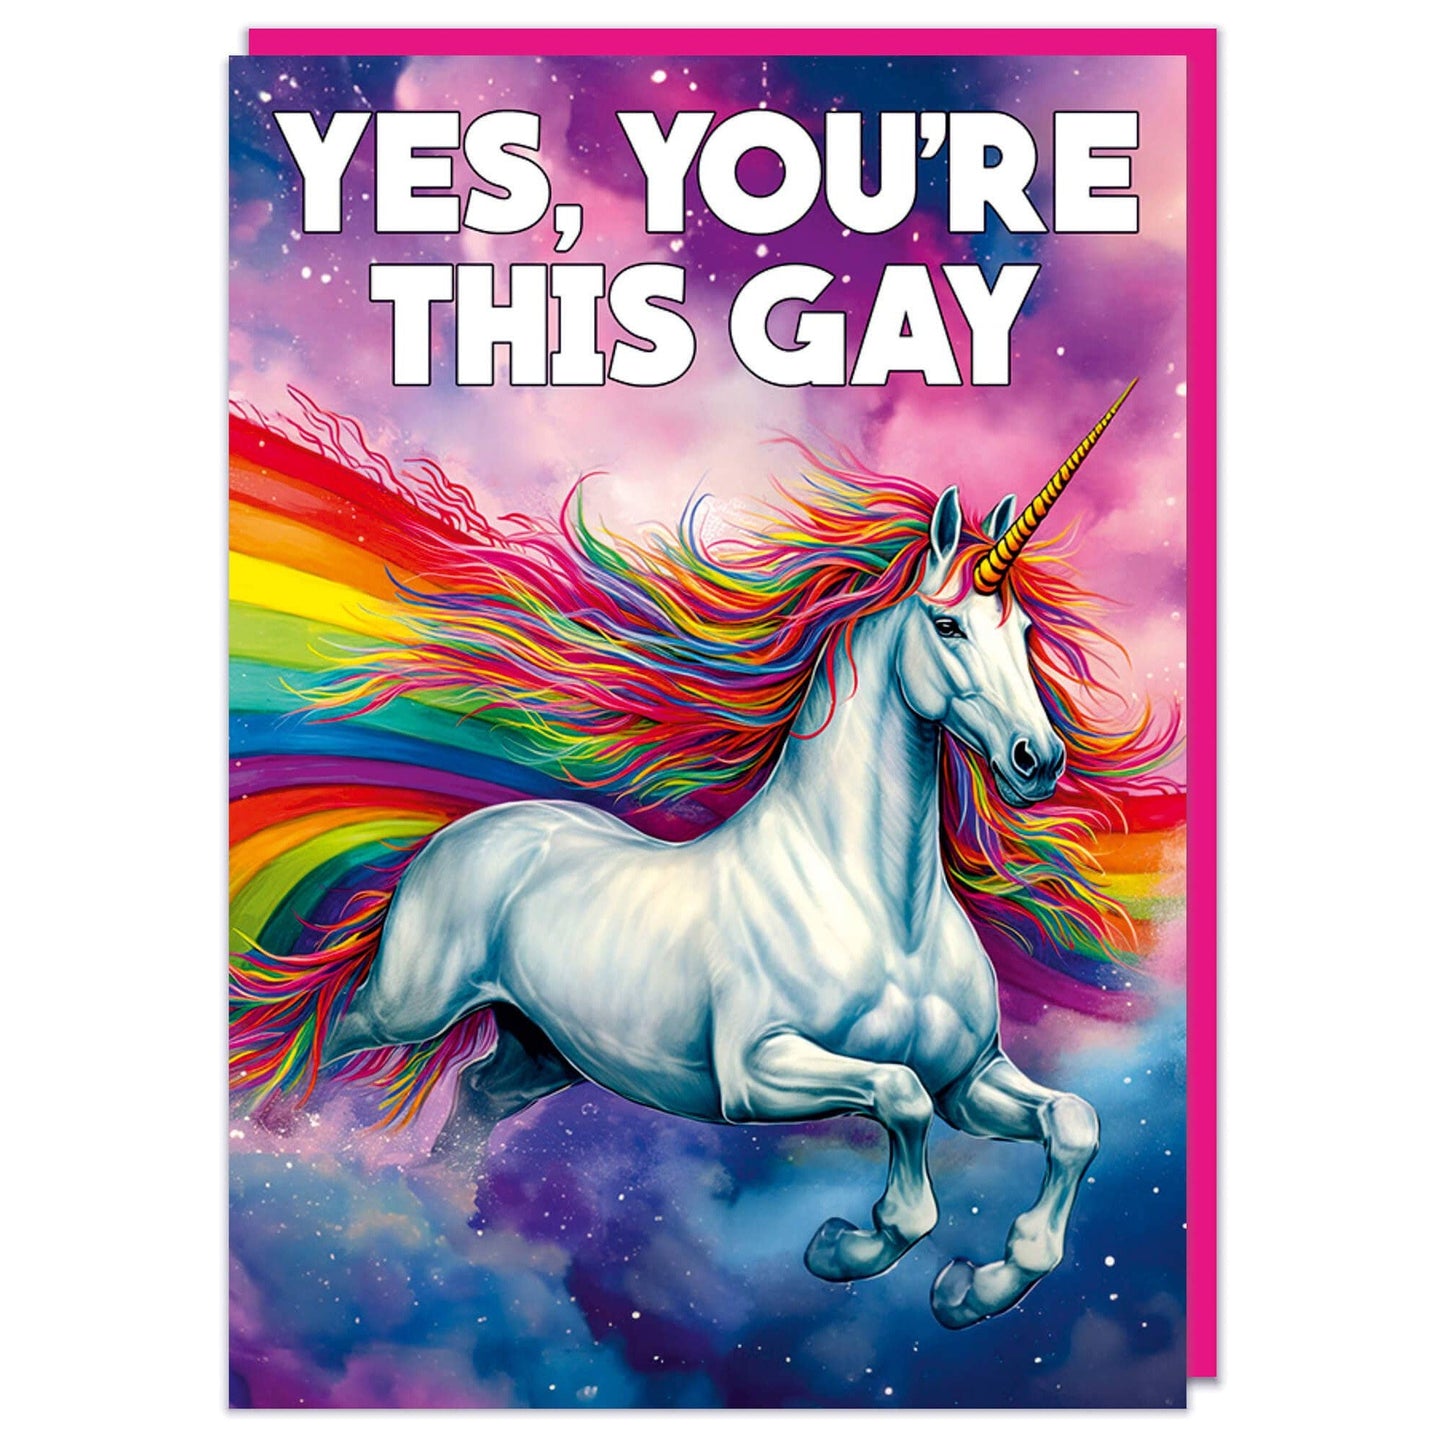 Yes, You're This Gay Greeting Card | Unicorn Rainbow Mane Image Birthday Card |